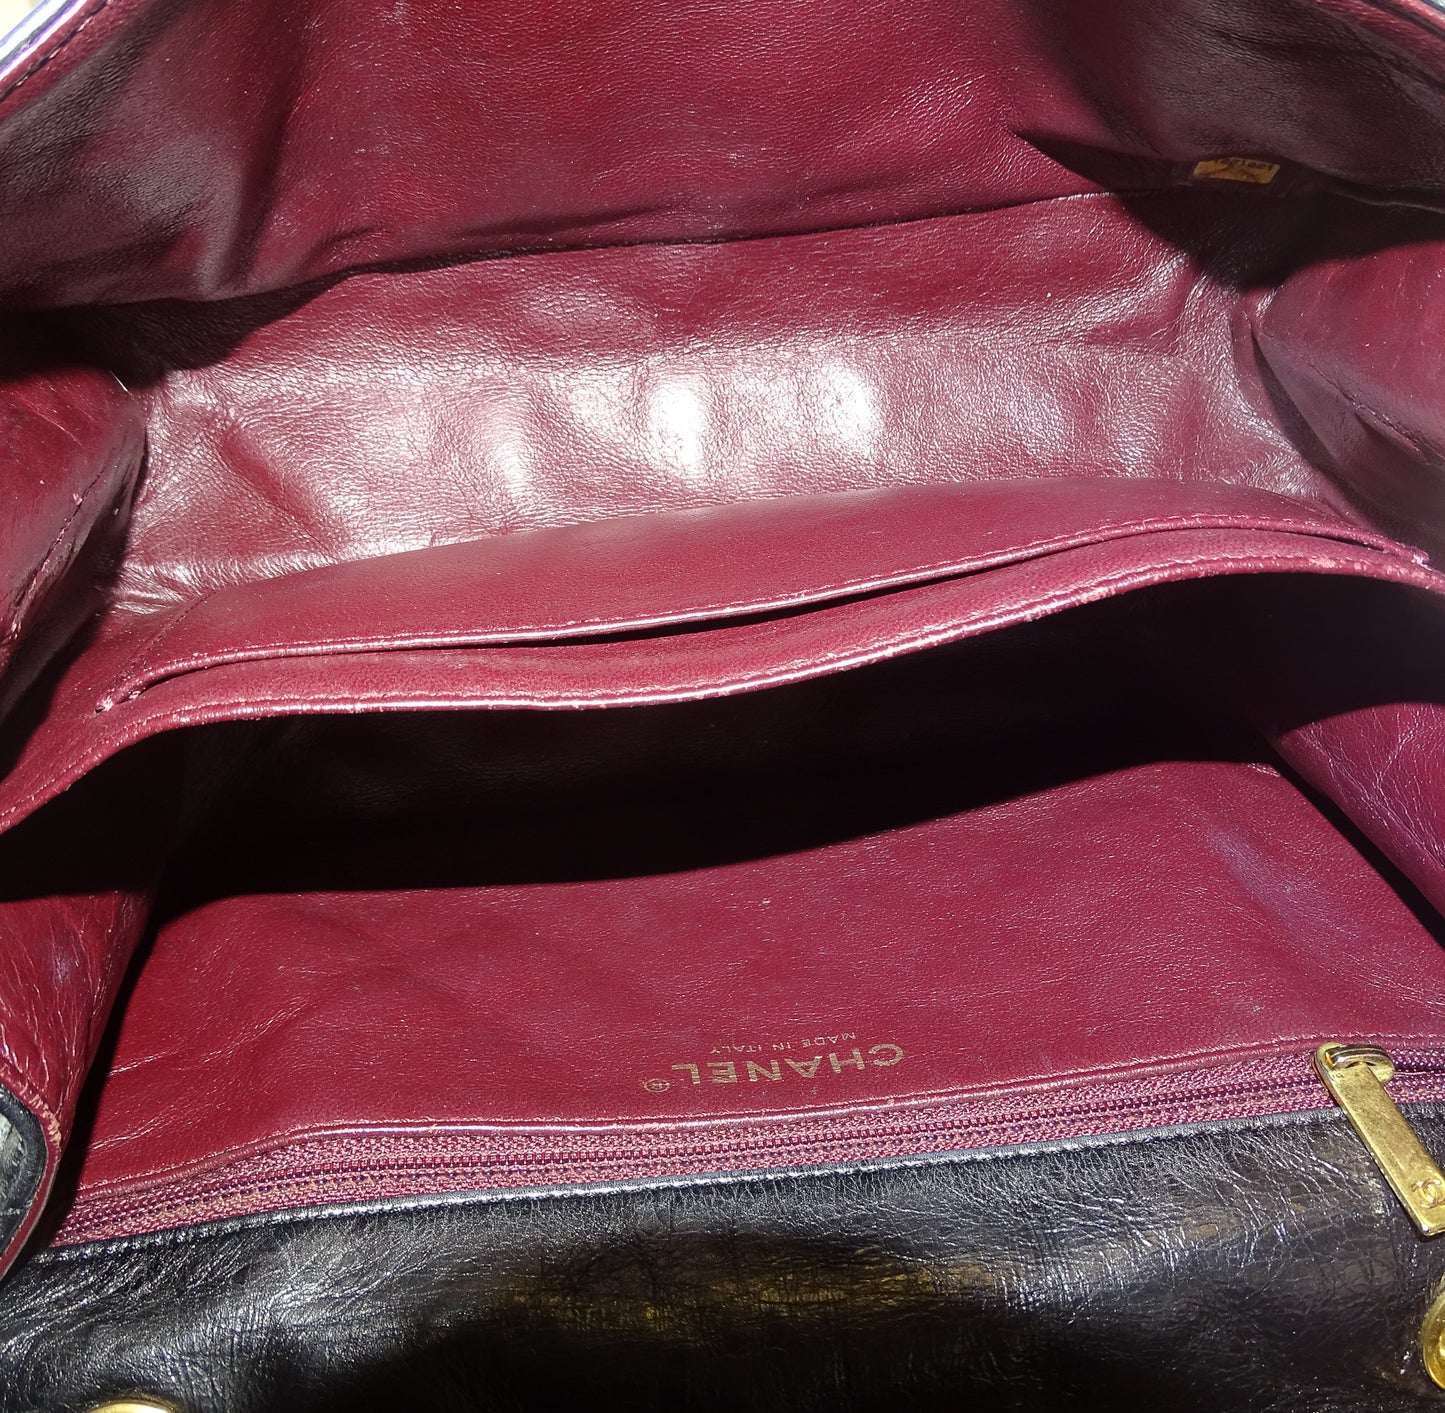 Chanel Black Glazed Calfskin 2.55 Reissue 224 Accordion Flap Bag 2008/09